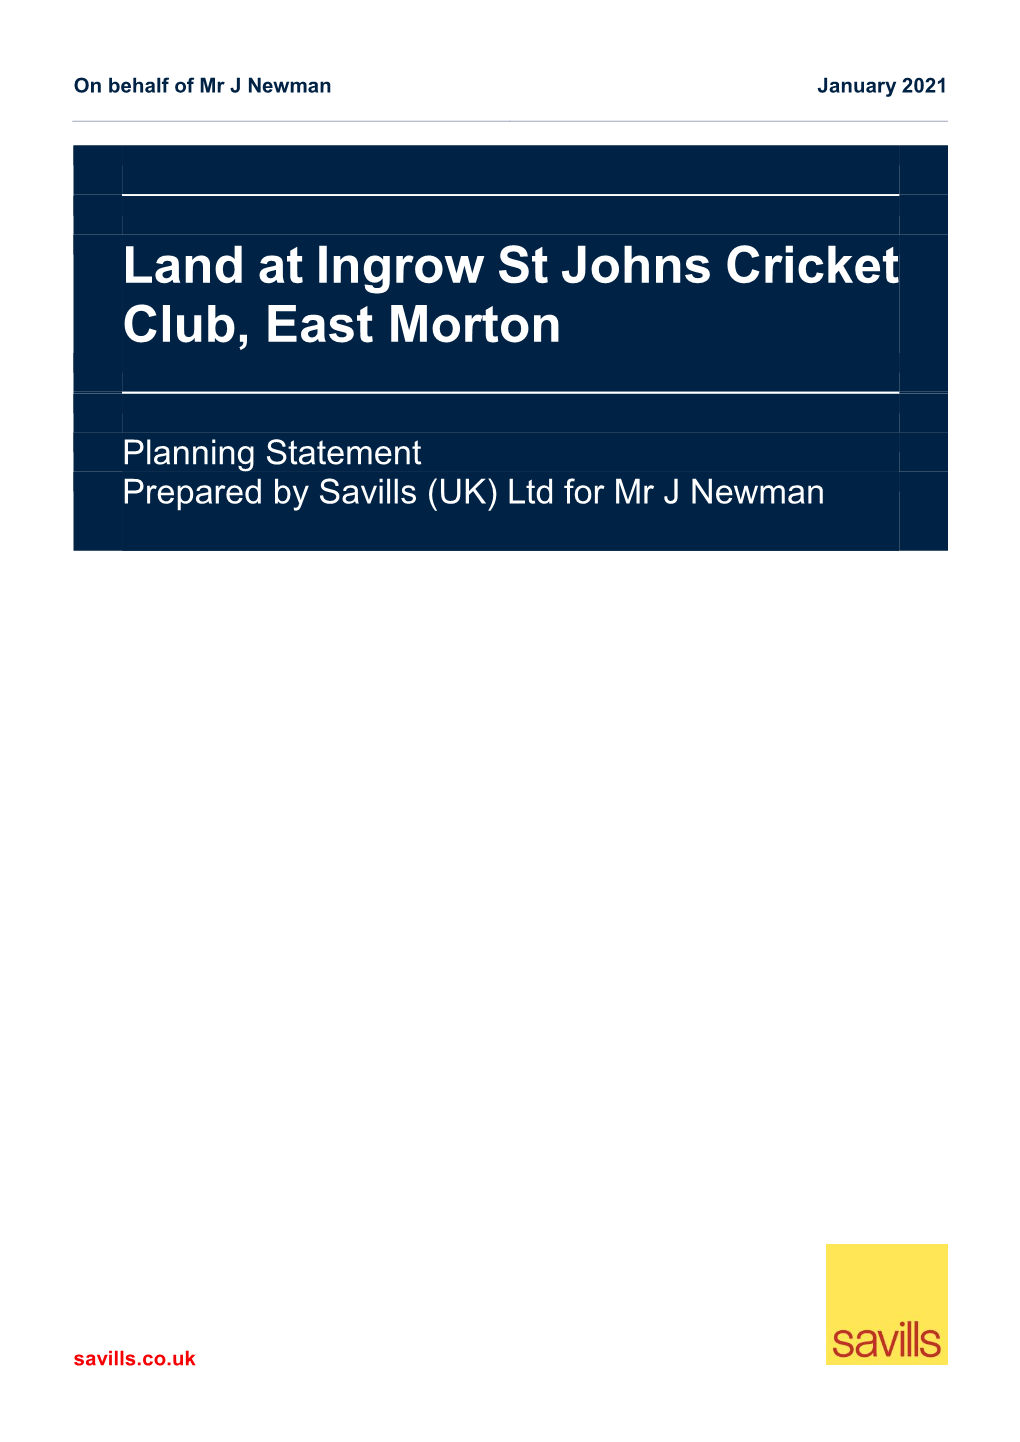 Land at Ingrow St Johns Cricket Club, East Morton